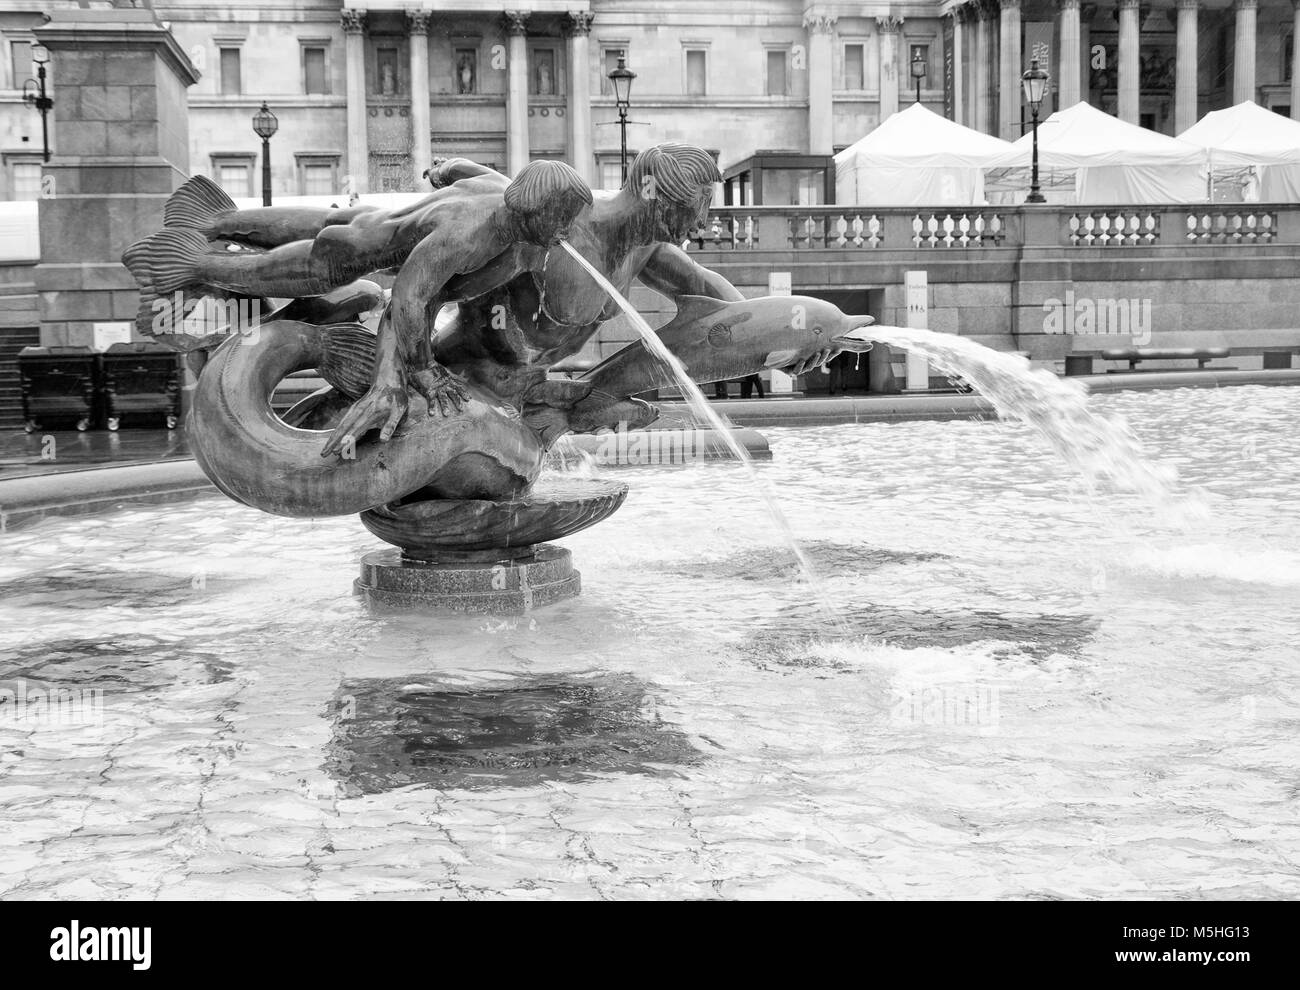 Fountain in Trafalgar Square, Central London, England, UK. Credit: London Snapper Stock Photo